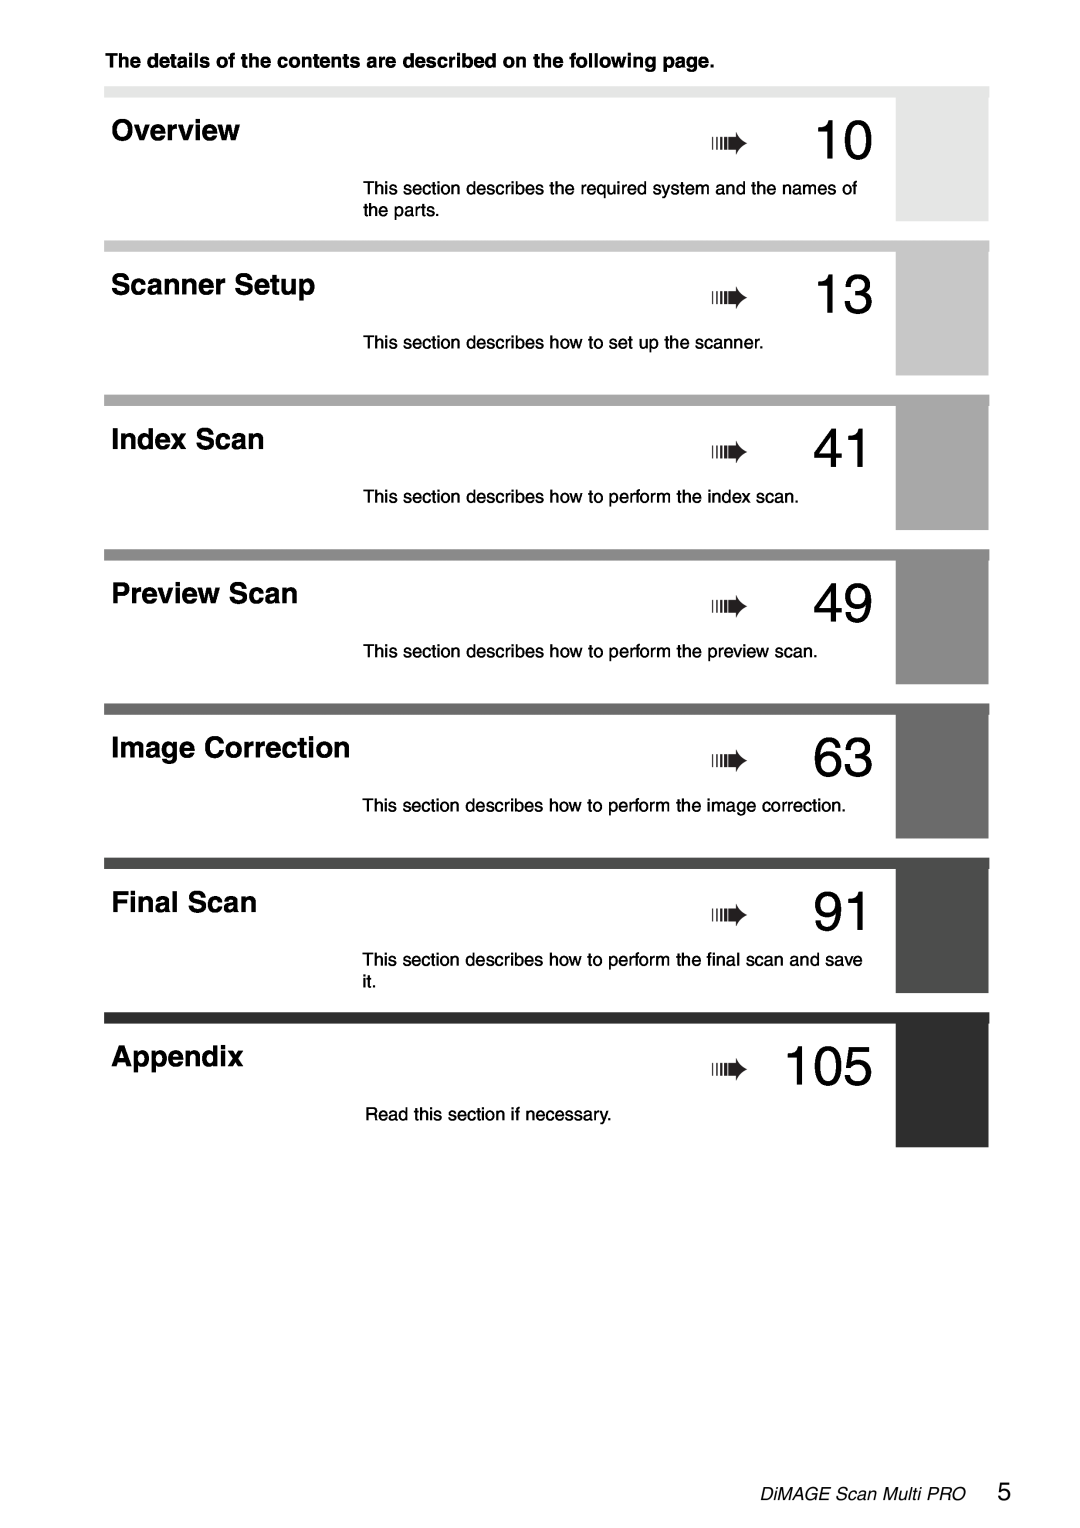 Konica Minolta Scan Multi PRO Overview, Scanner Setup, Index Scan, Preview Scan, Image Correction, Final Scan, Appendix 